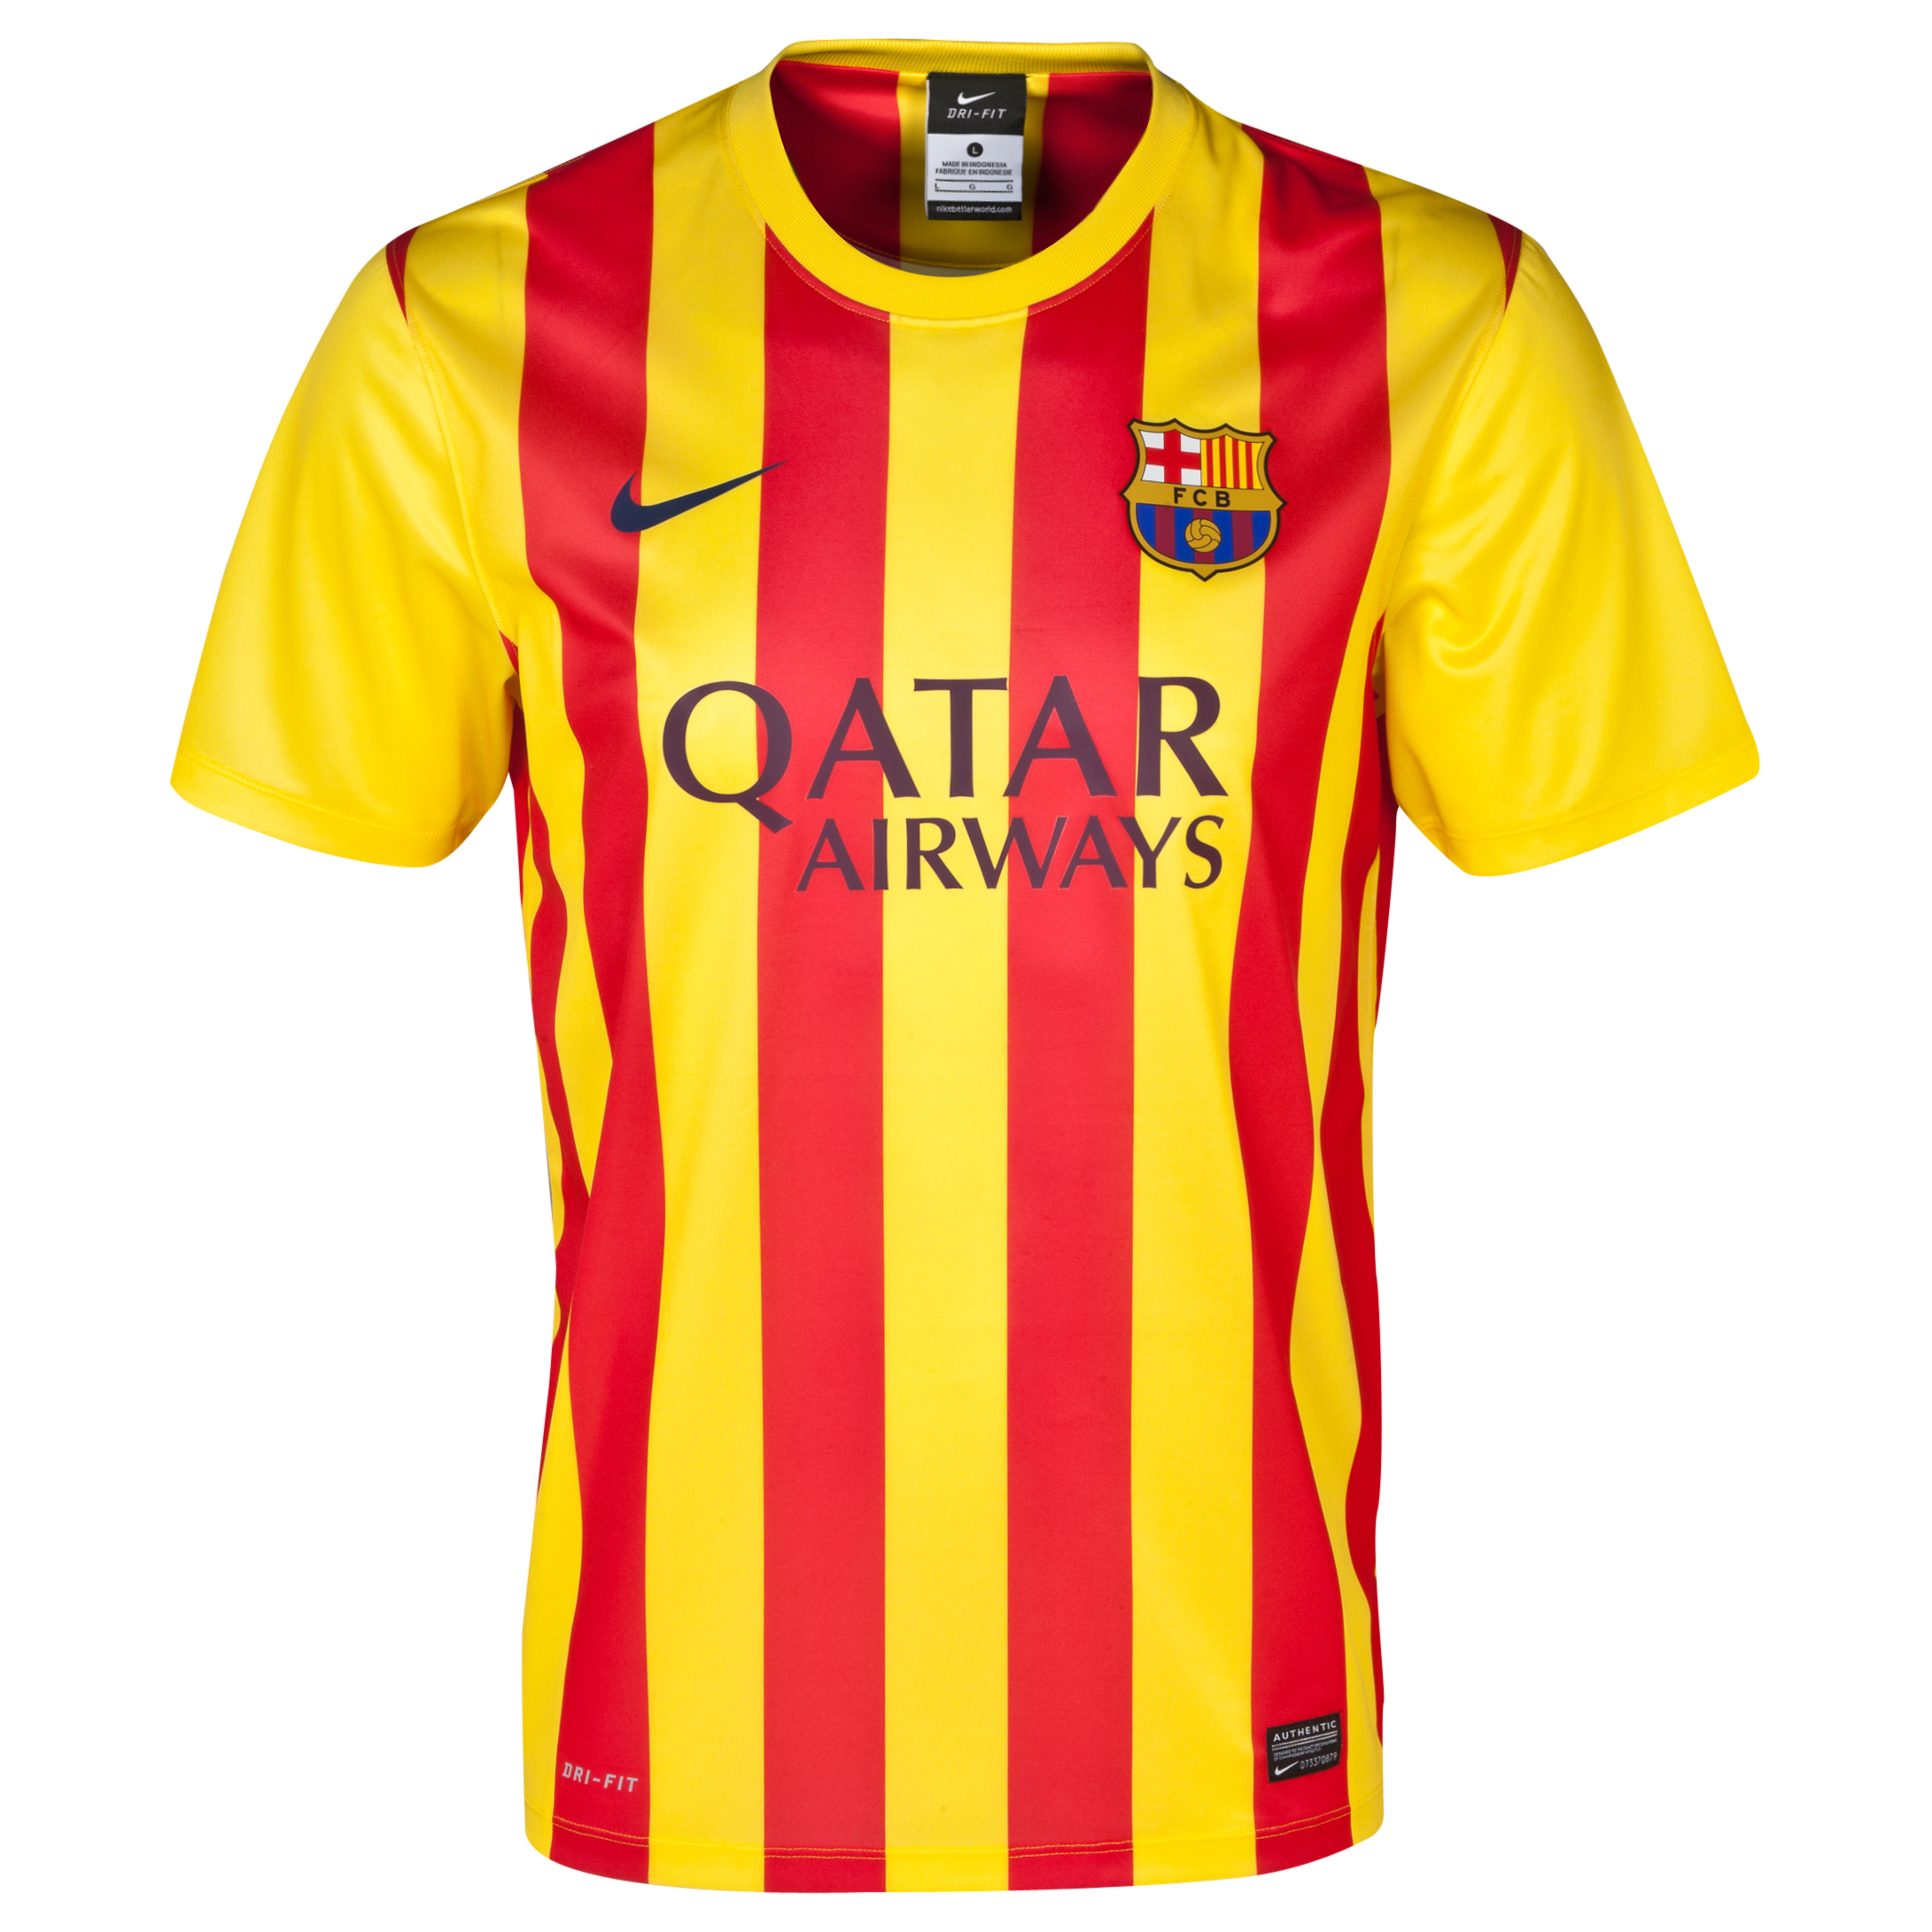 Barcelona Away Stadium Shirt 2013/14